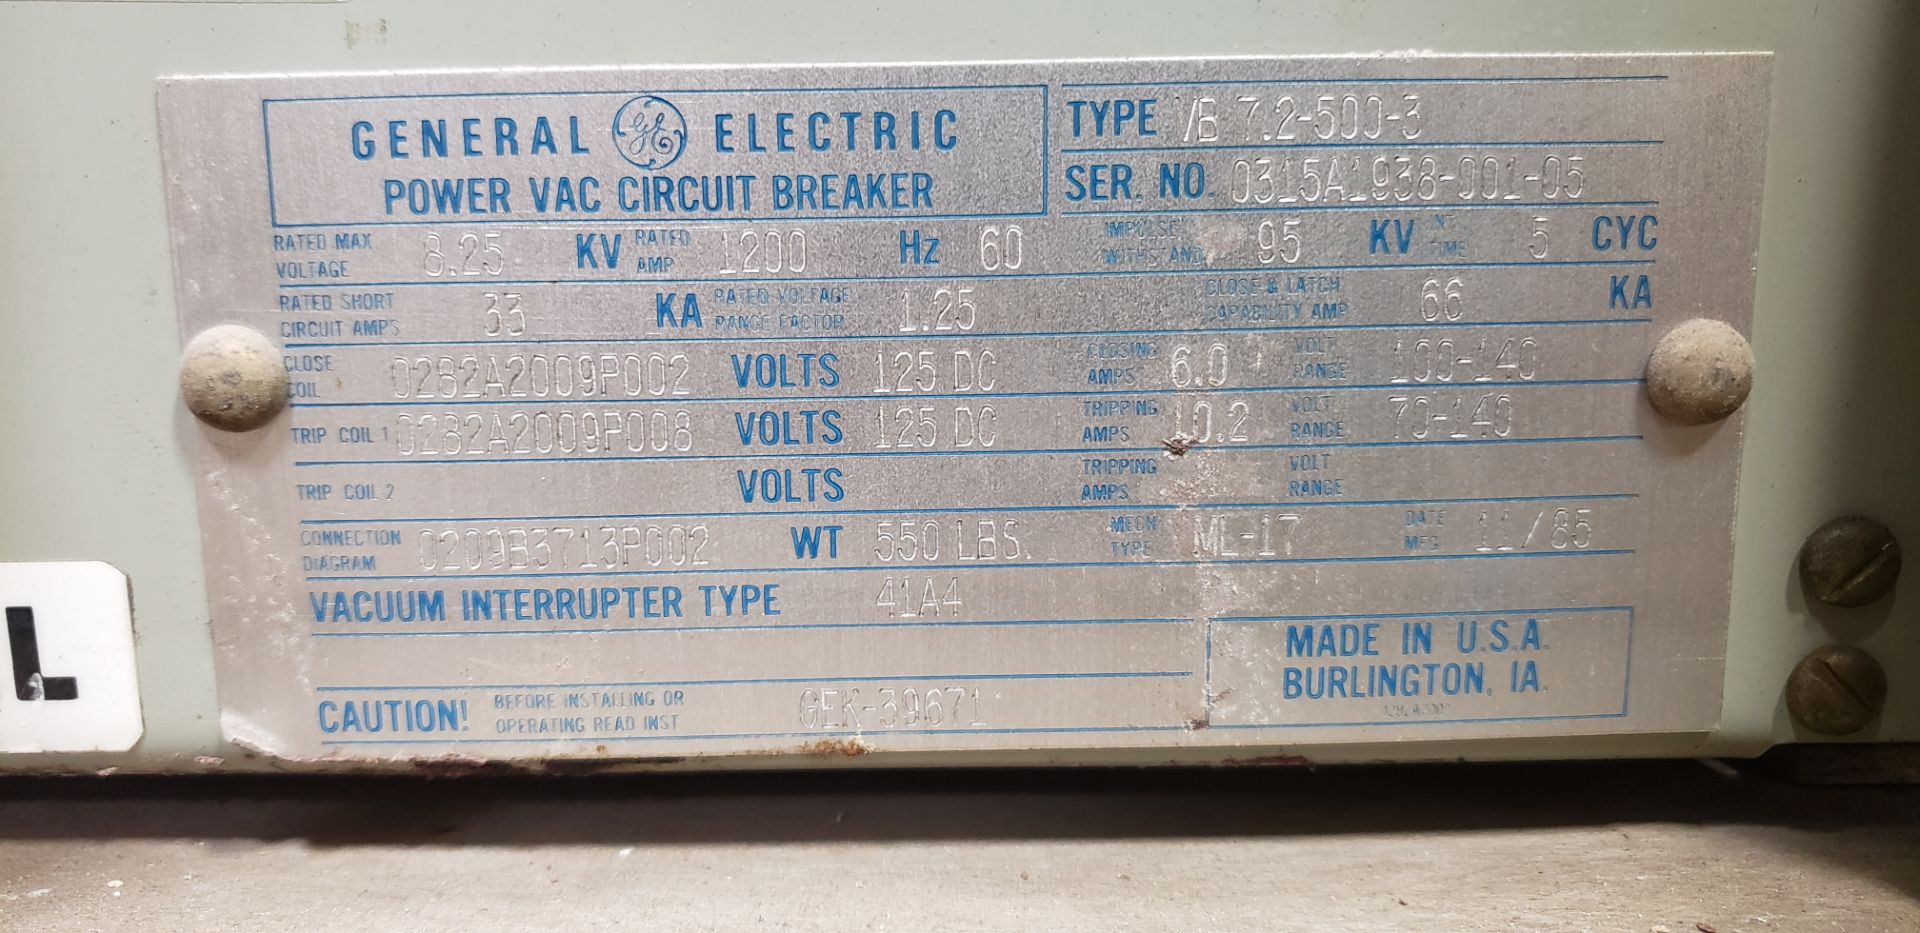 Lot of (12) GE VB 7.2-500-3 1200 Amp Power Vac Vacuum Breakers - Image 5 of 5